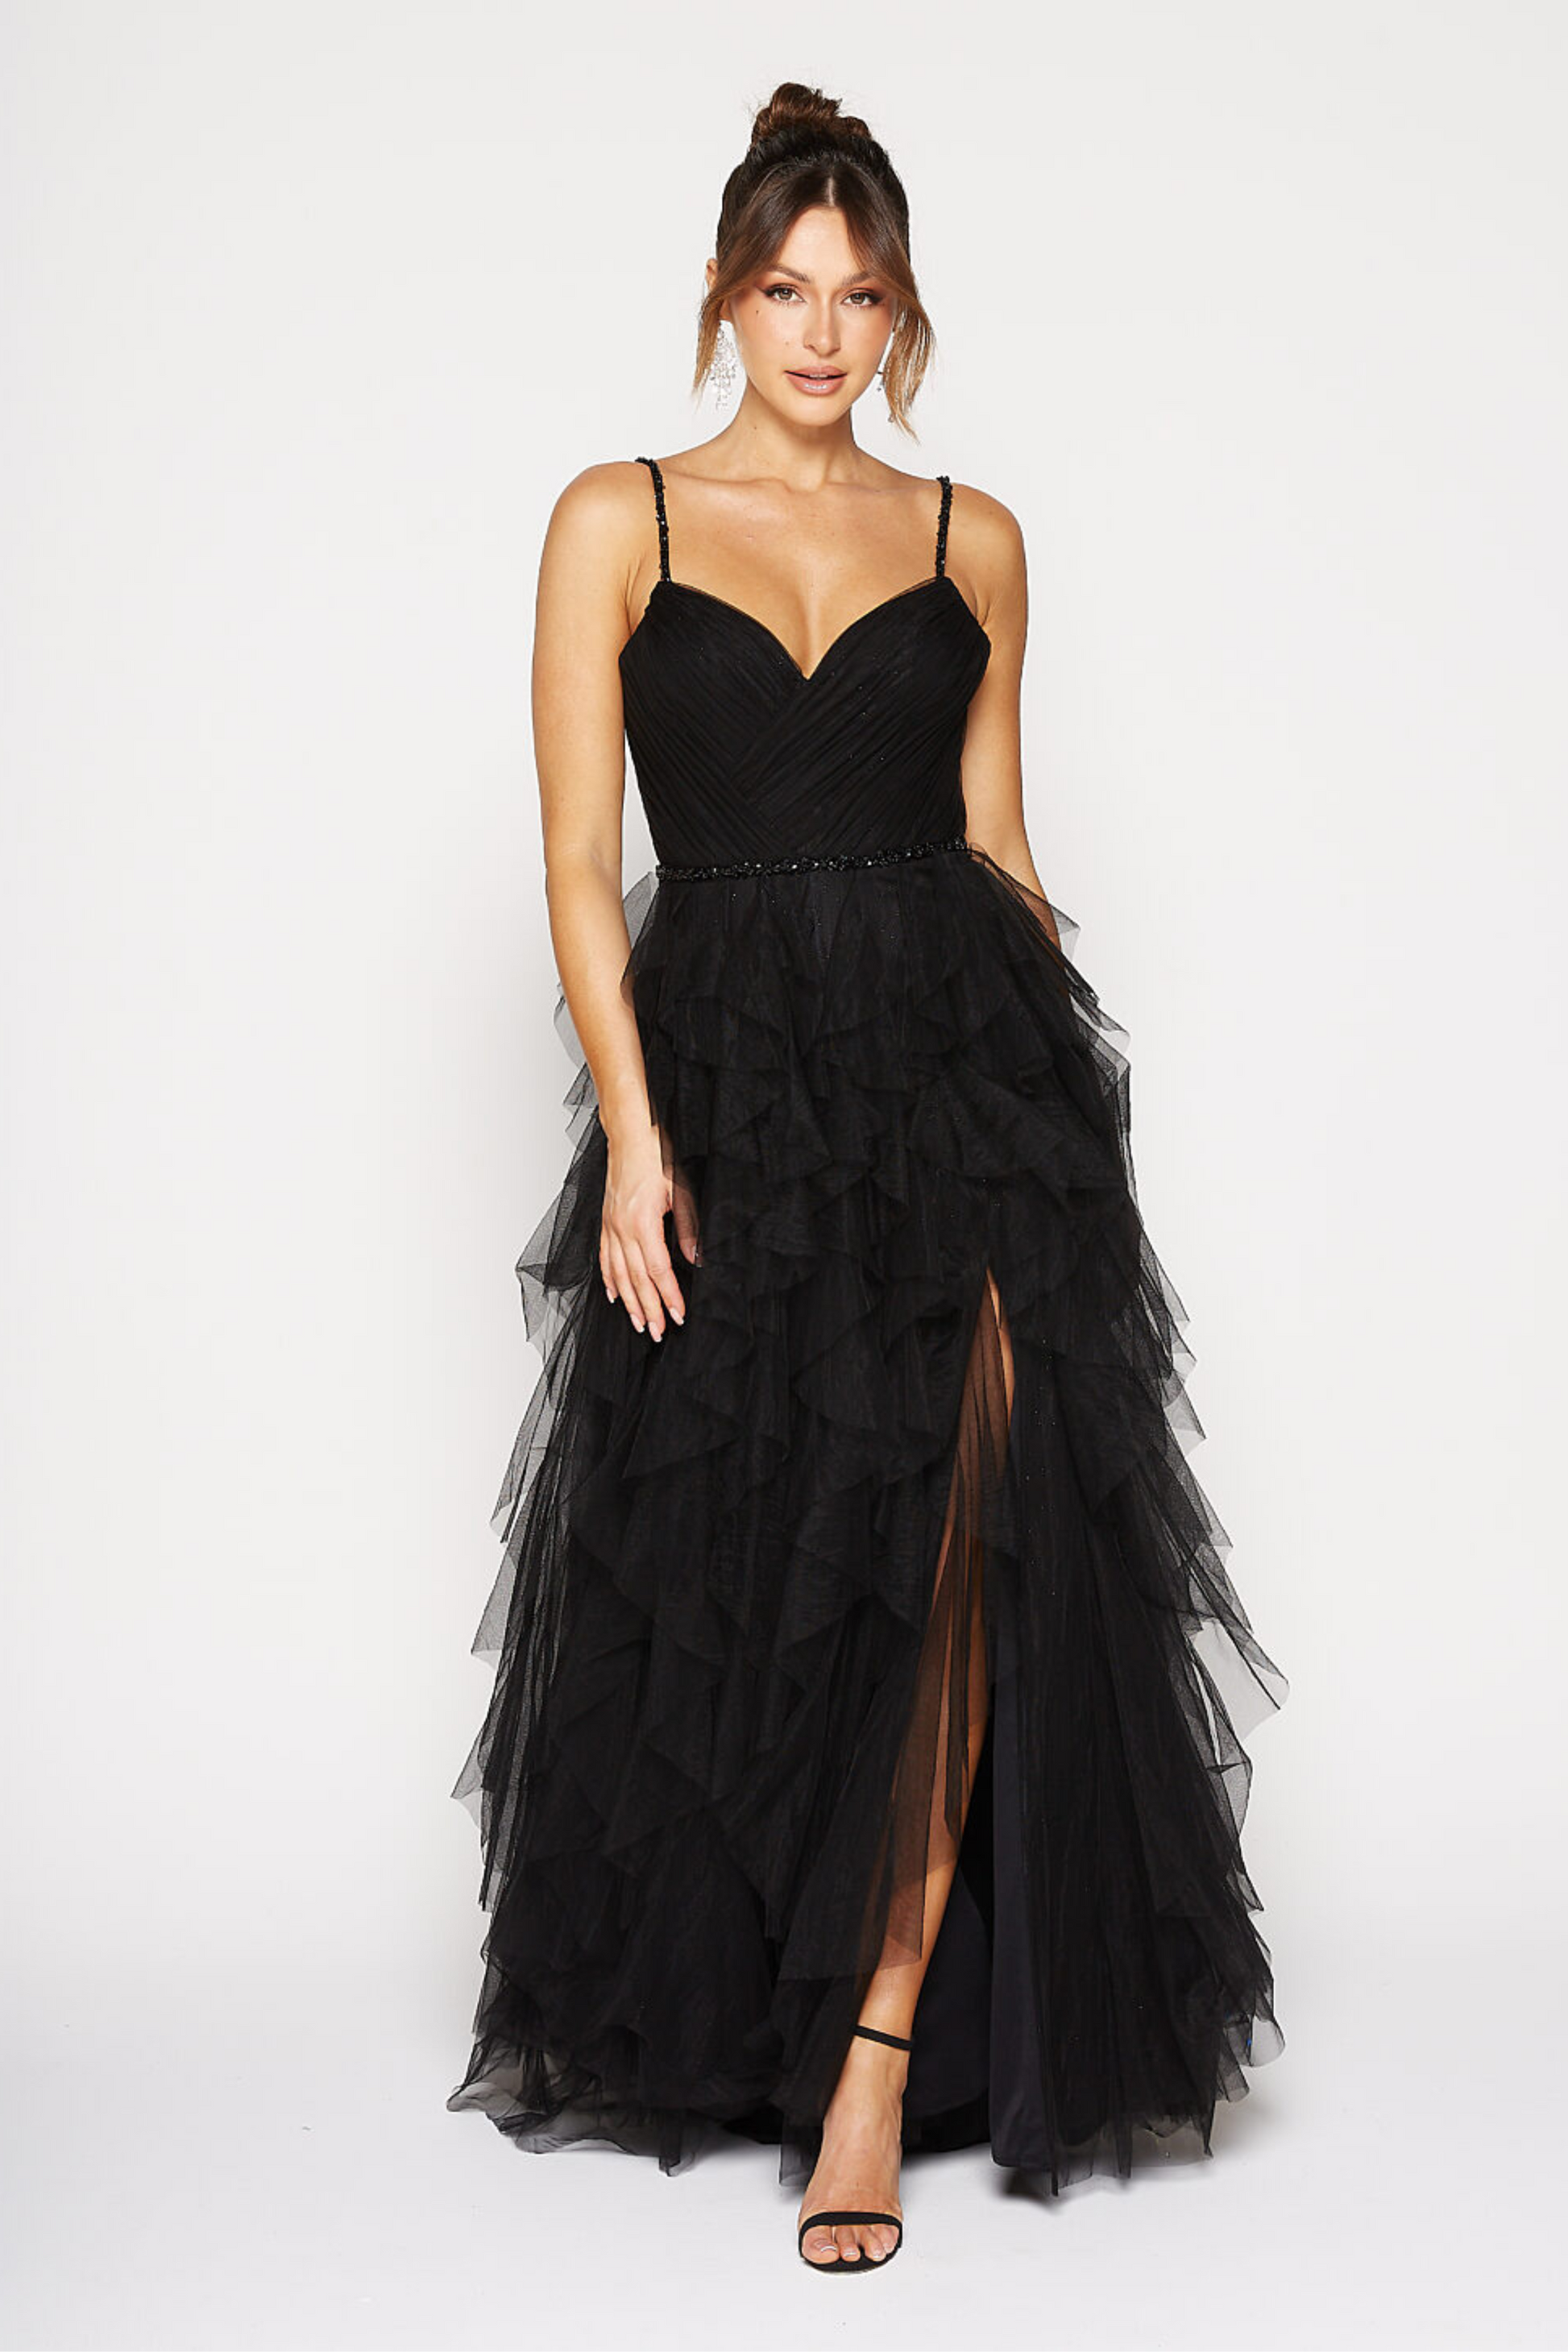 Tania Olsen a-line formal dress in black ruffle tulle